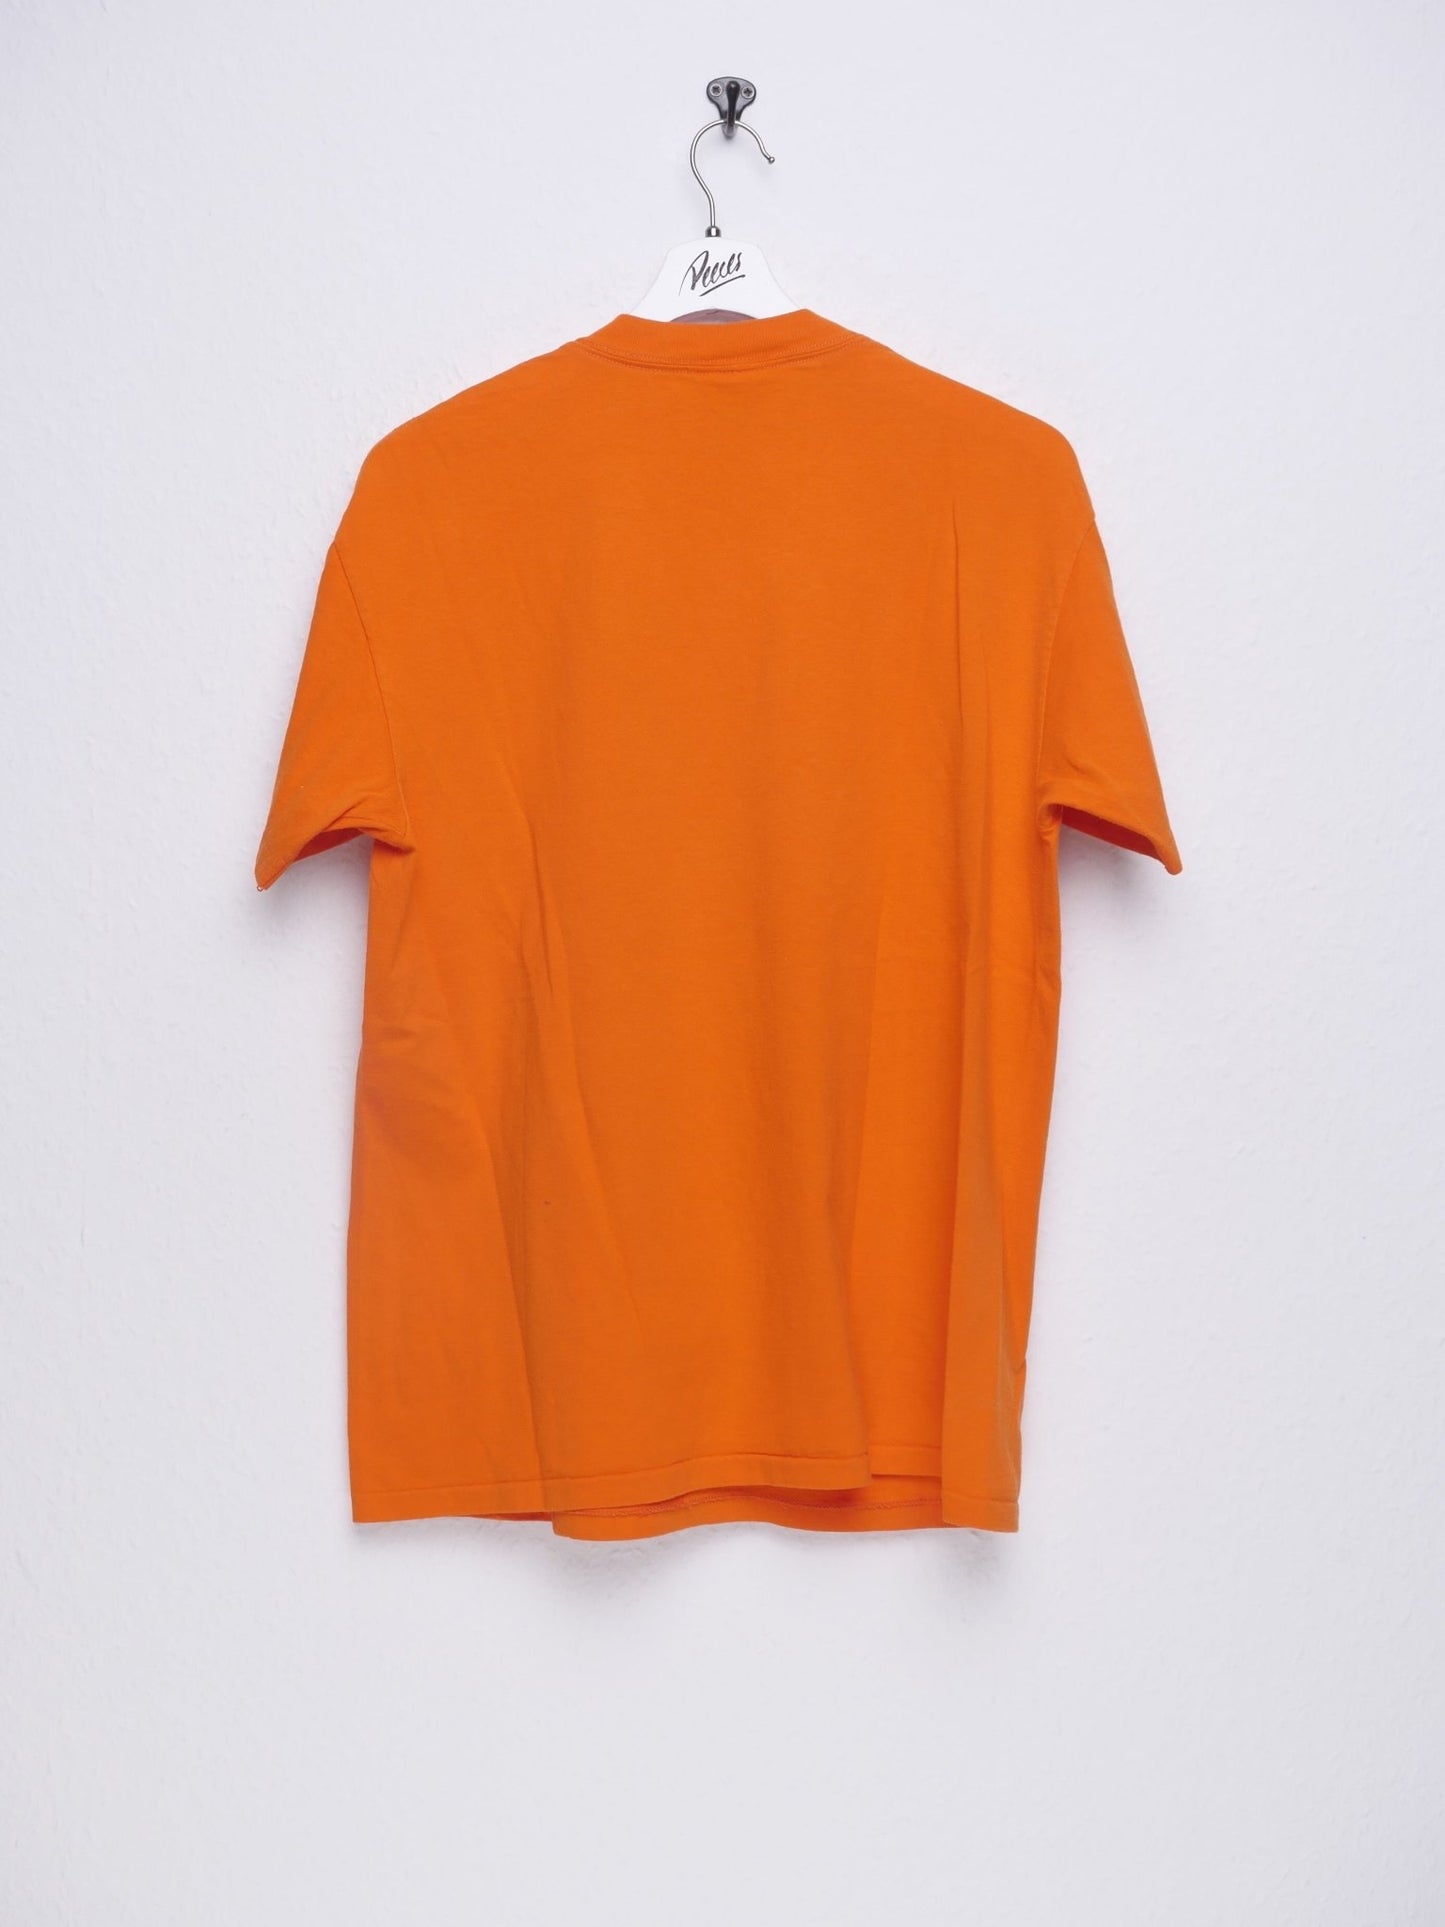 Halloween printed Graphic orange Shirt - Peeces